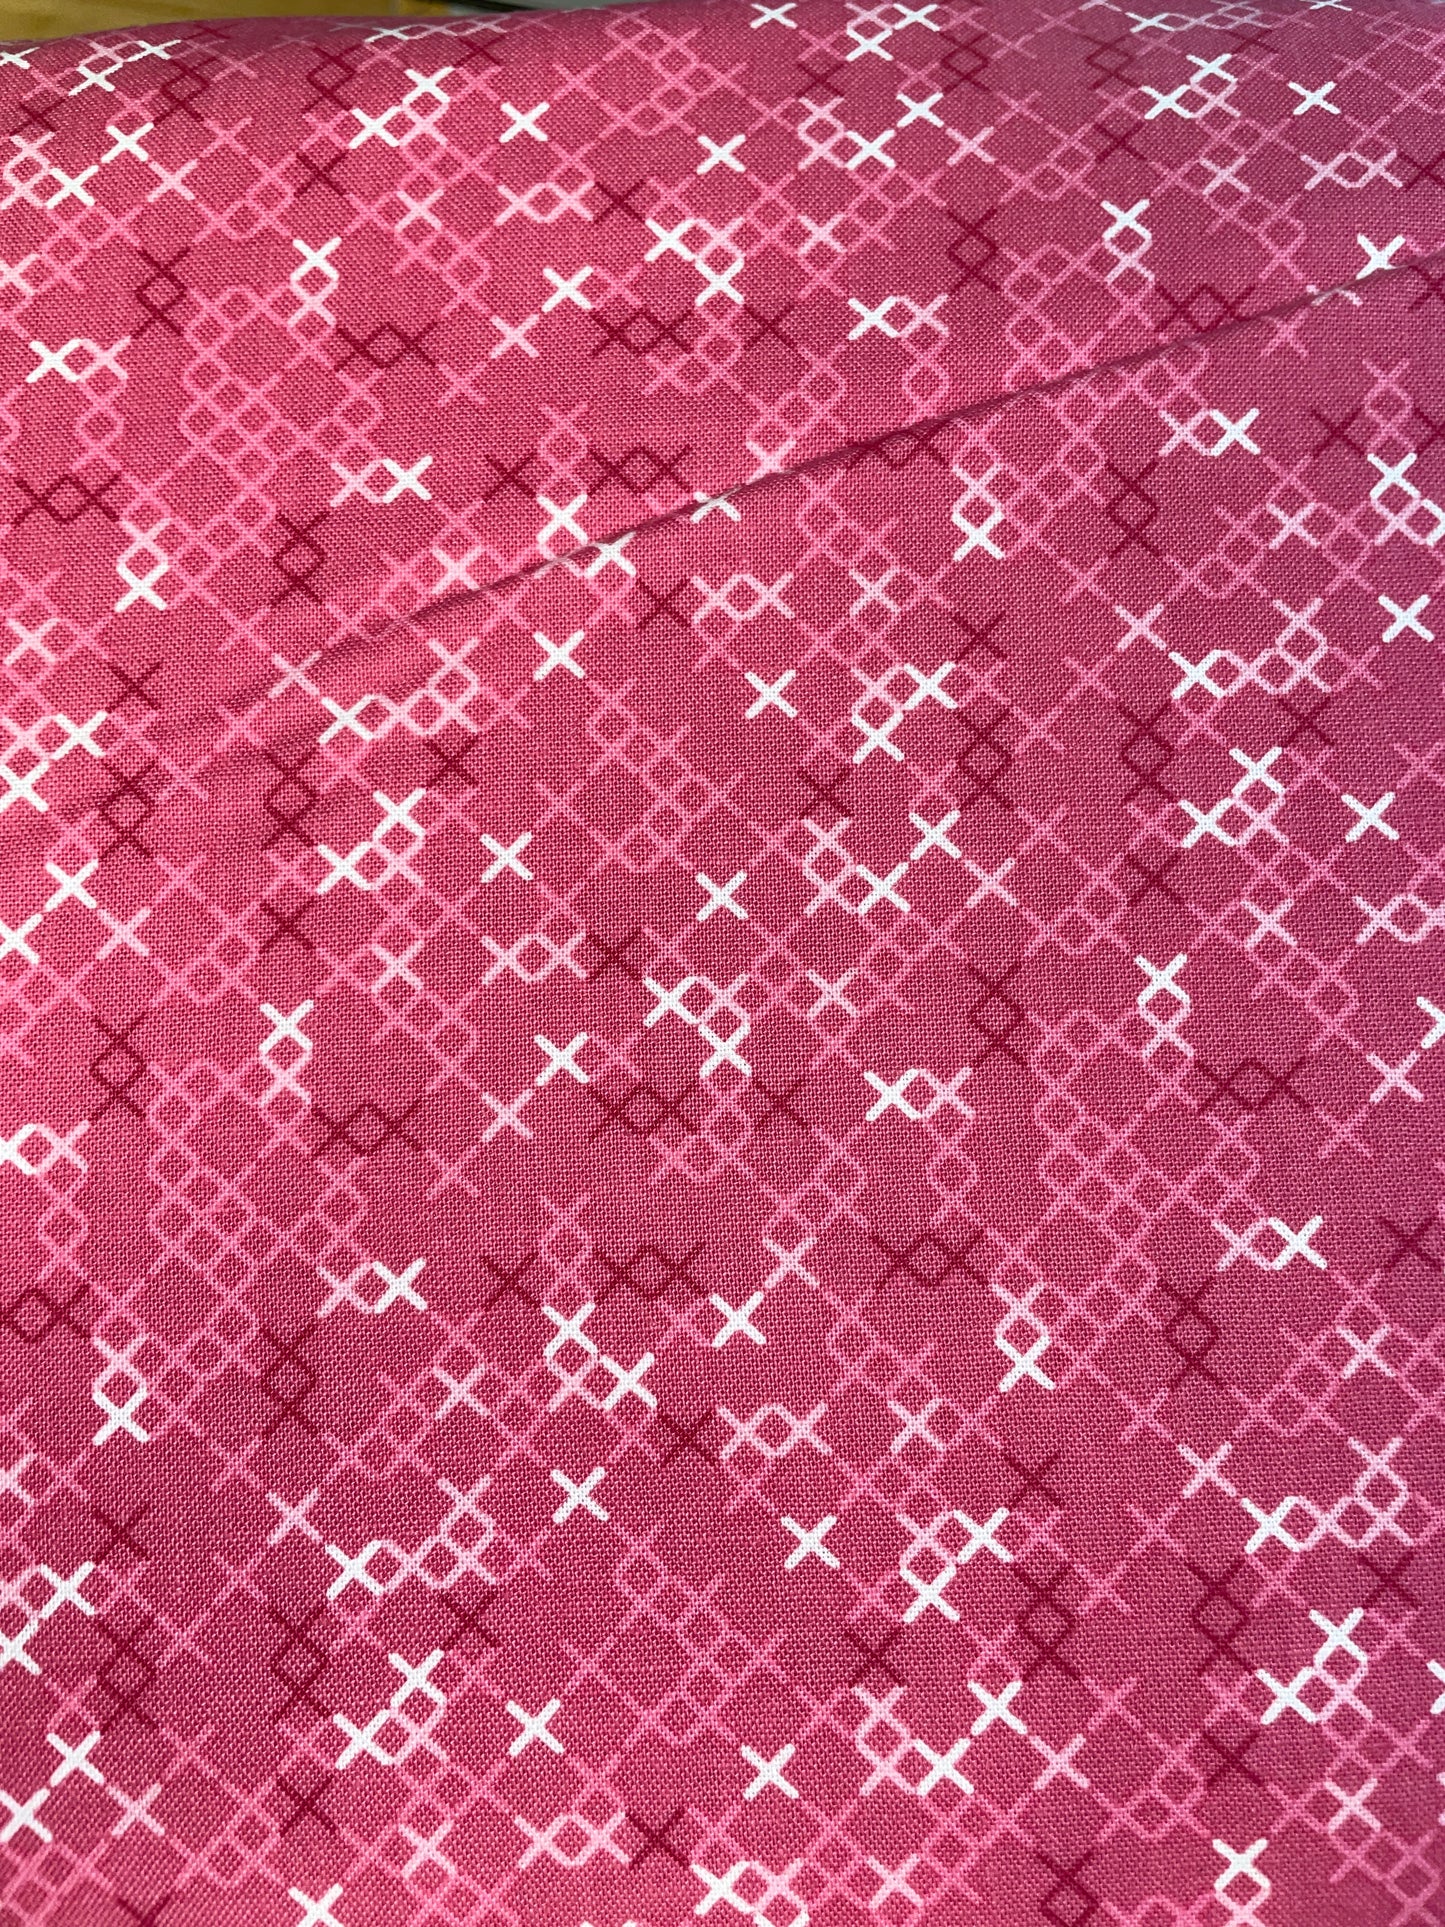 Cross Stitch Fabric Yardage By Bernartex